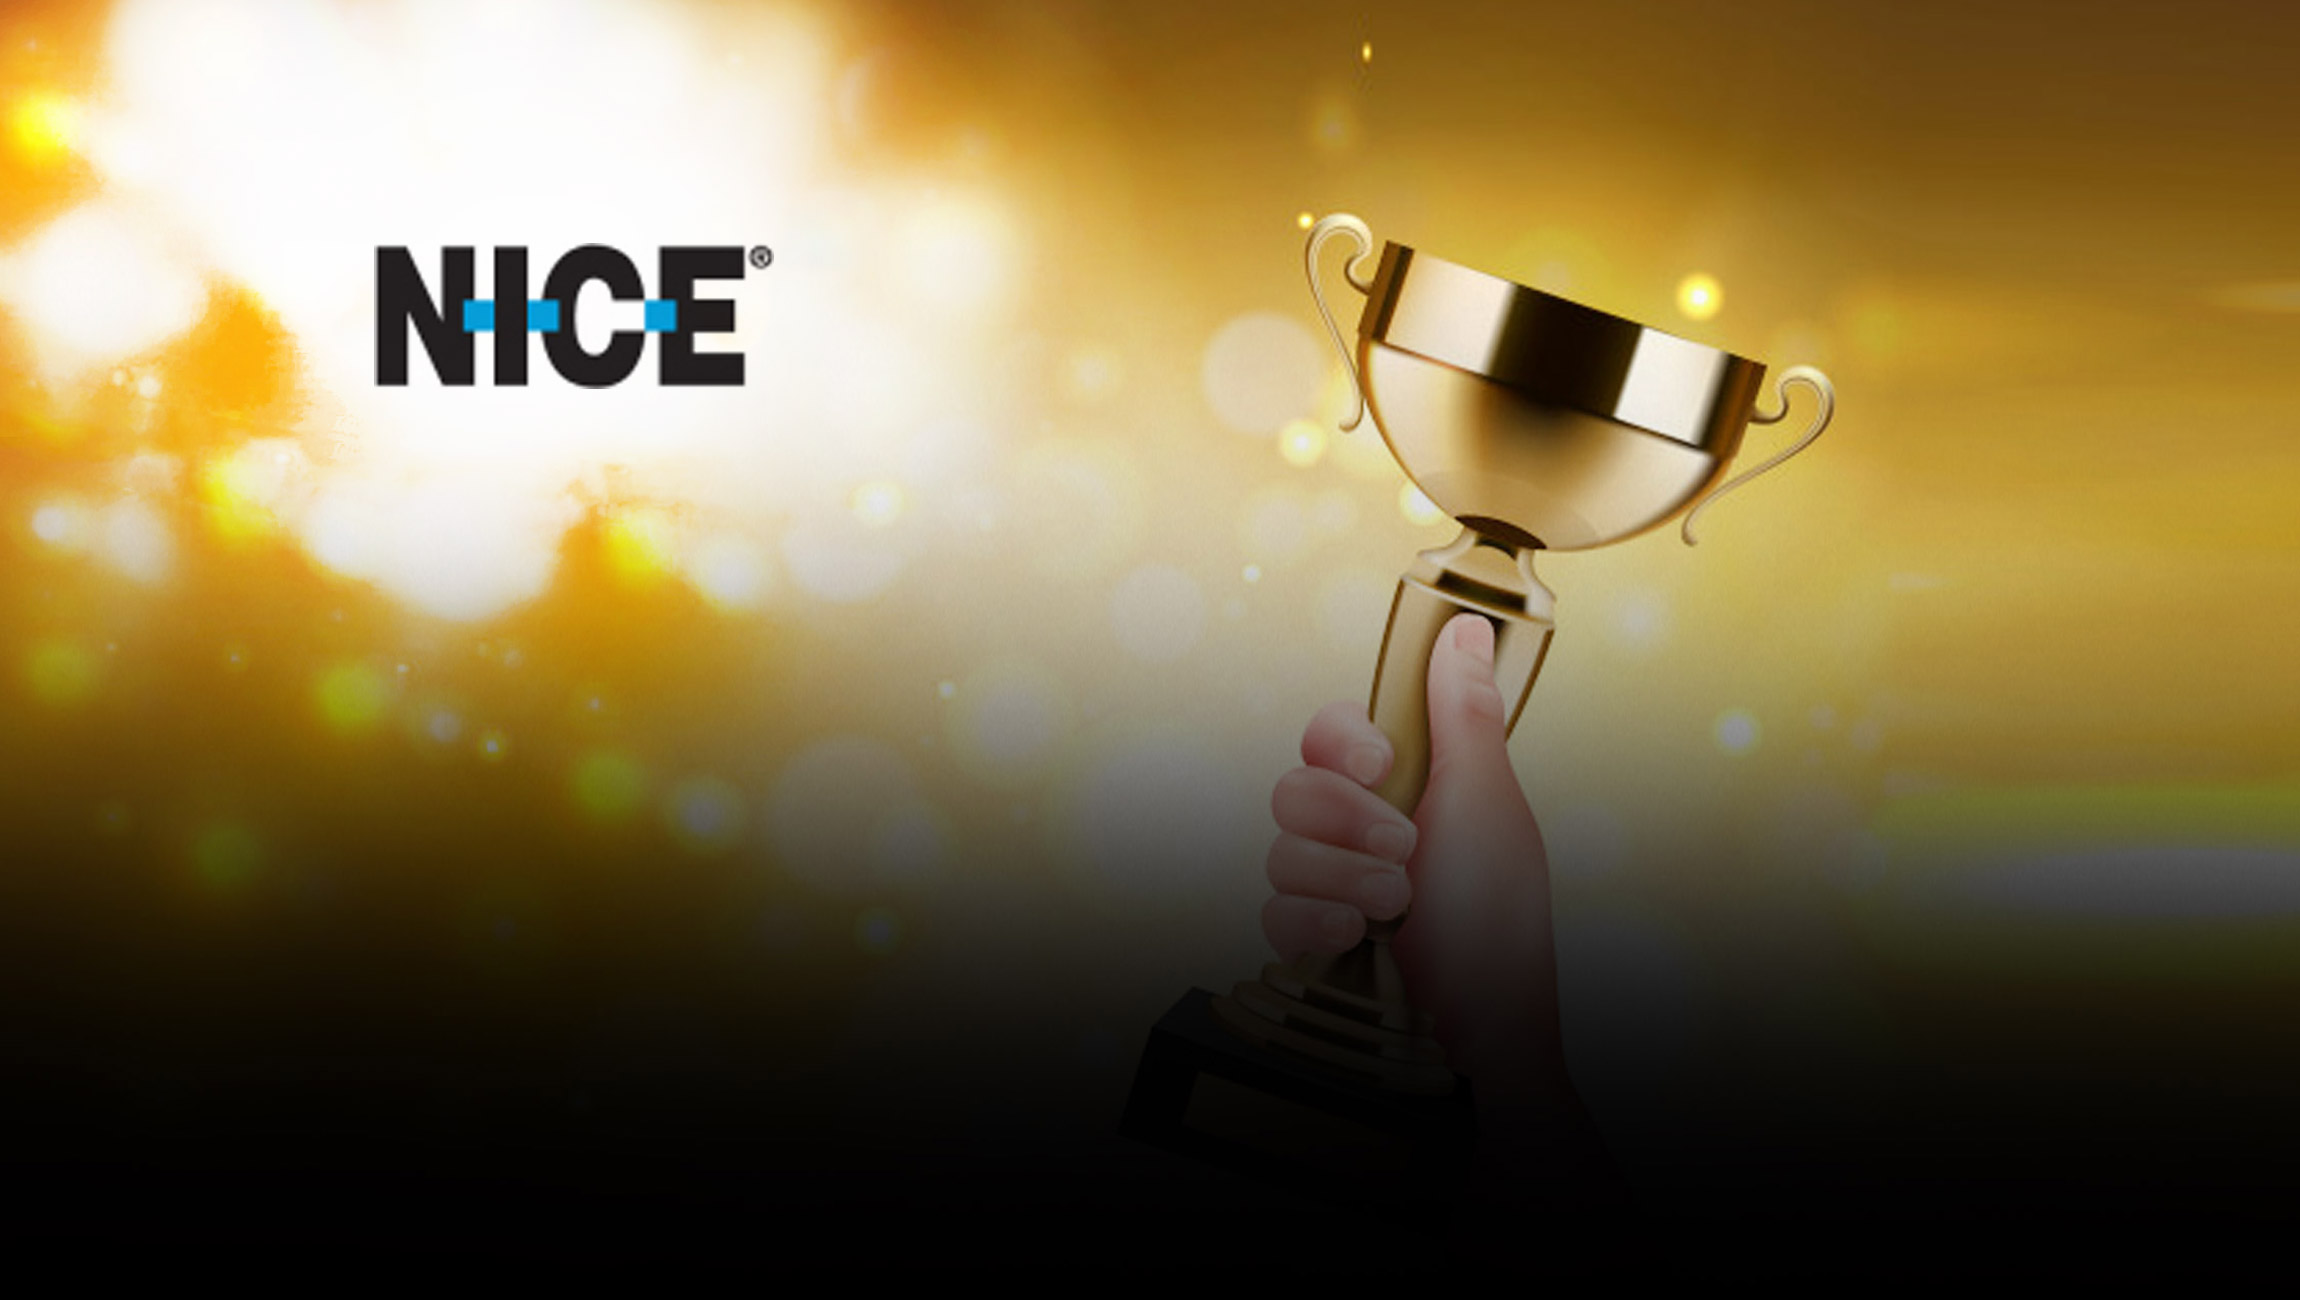 NICE CXone Awarded TMC’s 2022 Cloud Computing Product of the Year Award